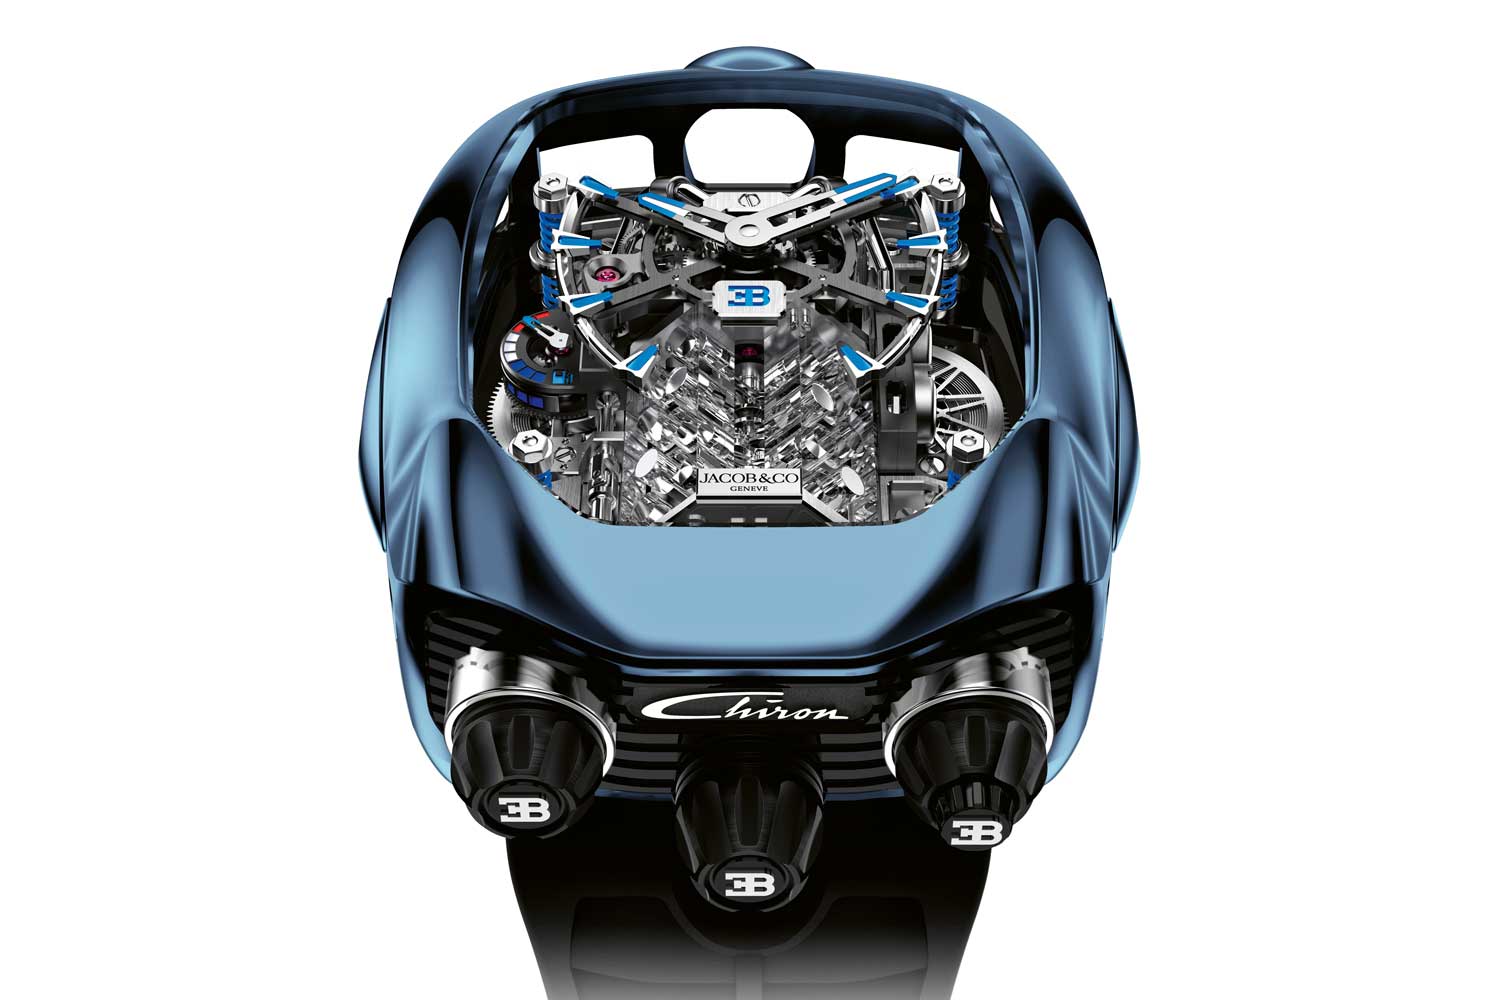 An iteration of the Bugatti Chiron in blue titanium